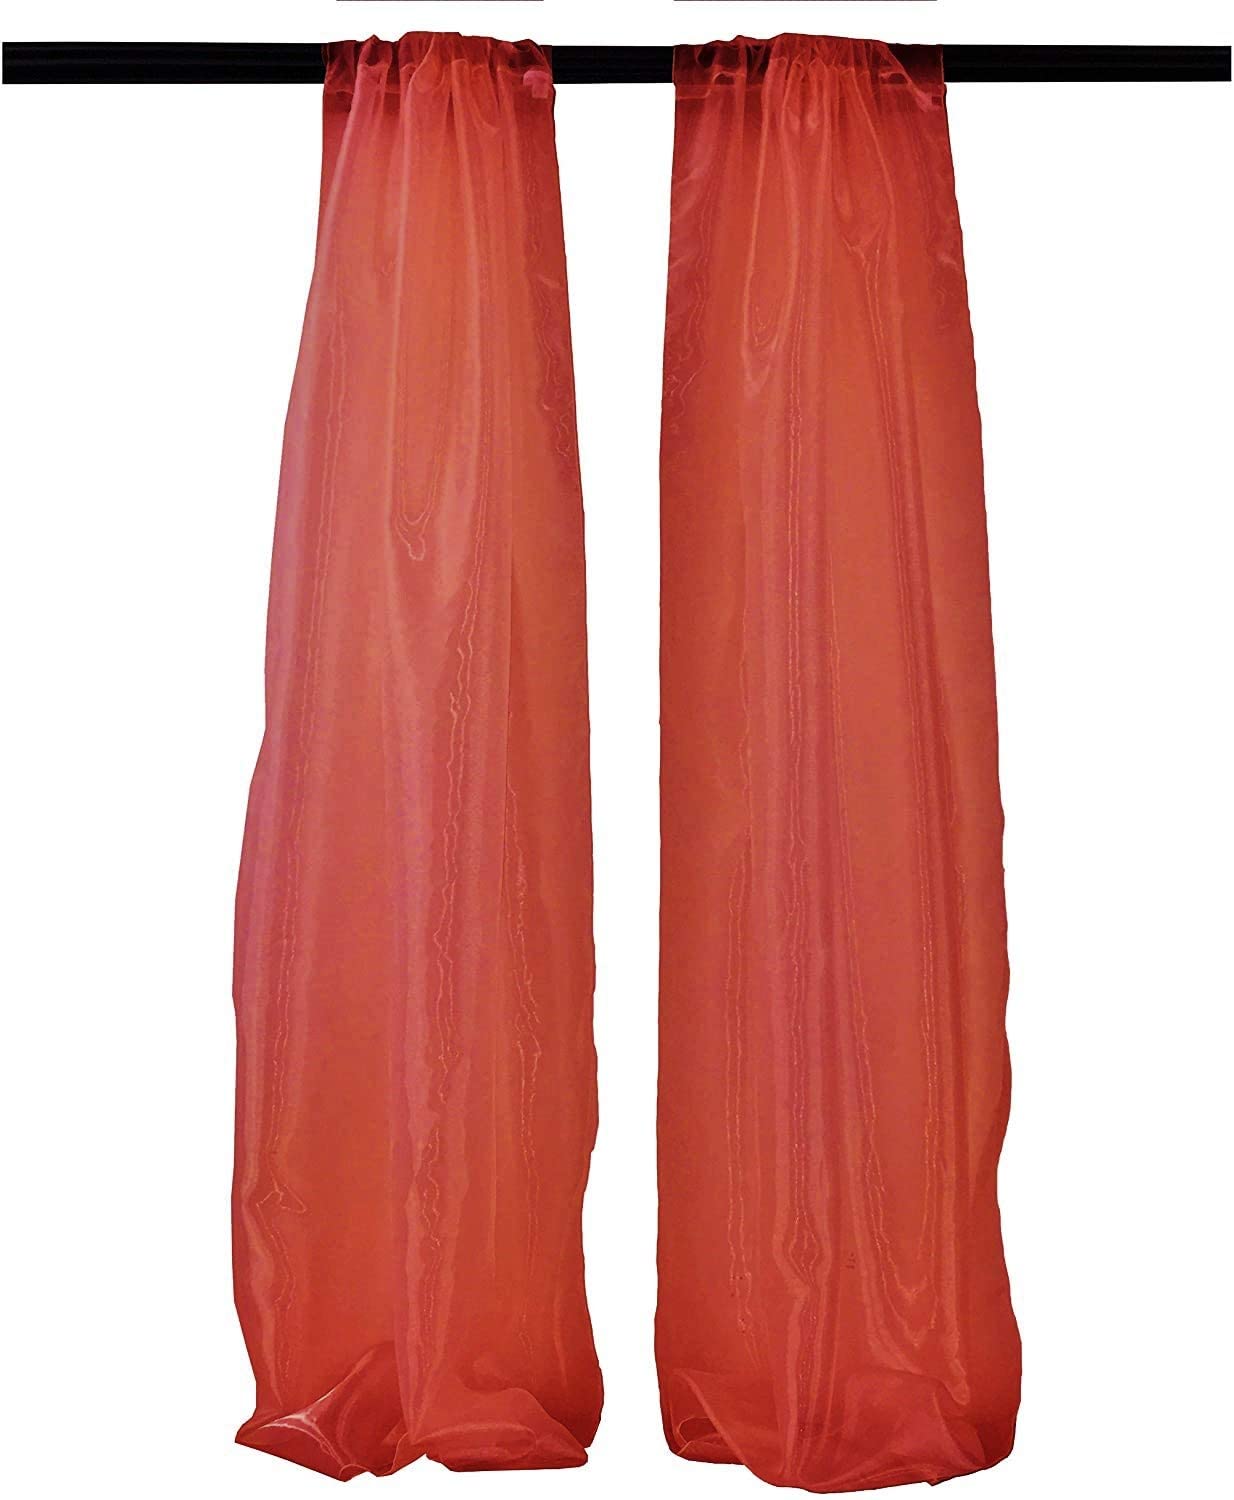 100% Polyester Sheer Mirror Organza Backdrop Drape, Curtain Panels, Room Divider, 1 Pair (Red,